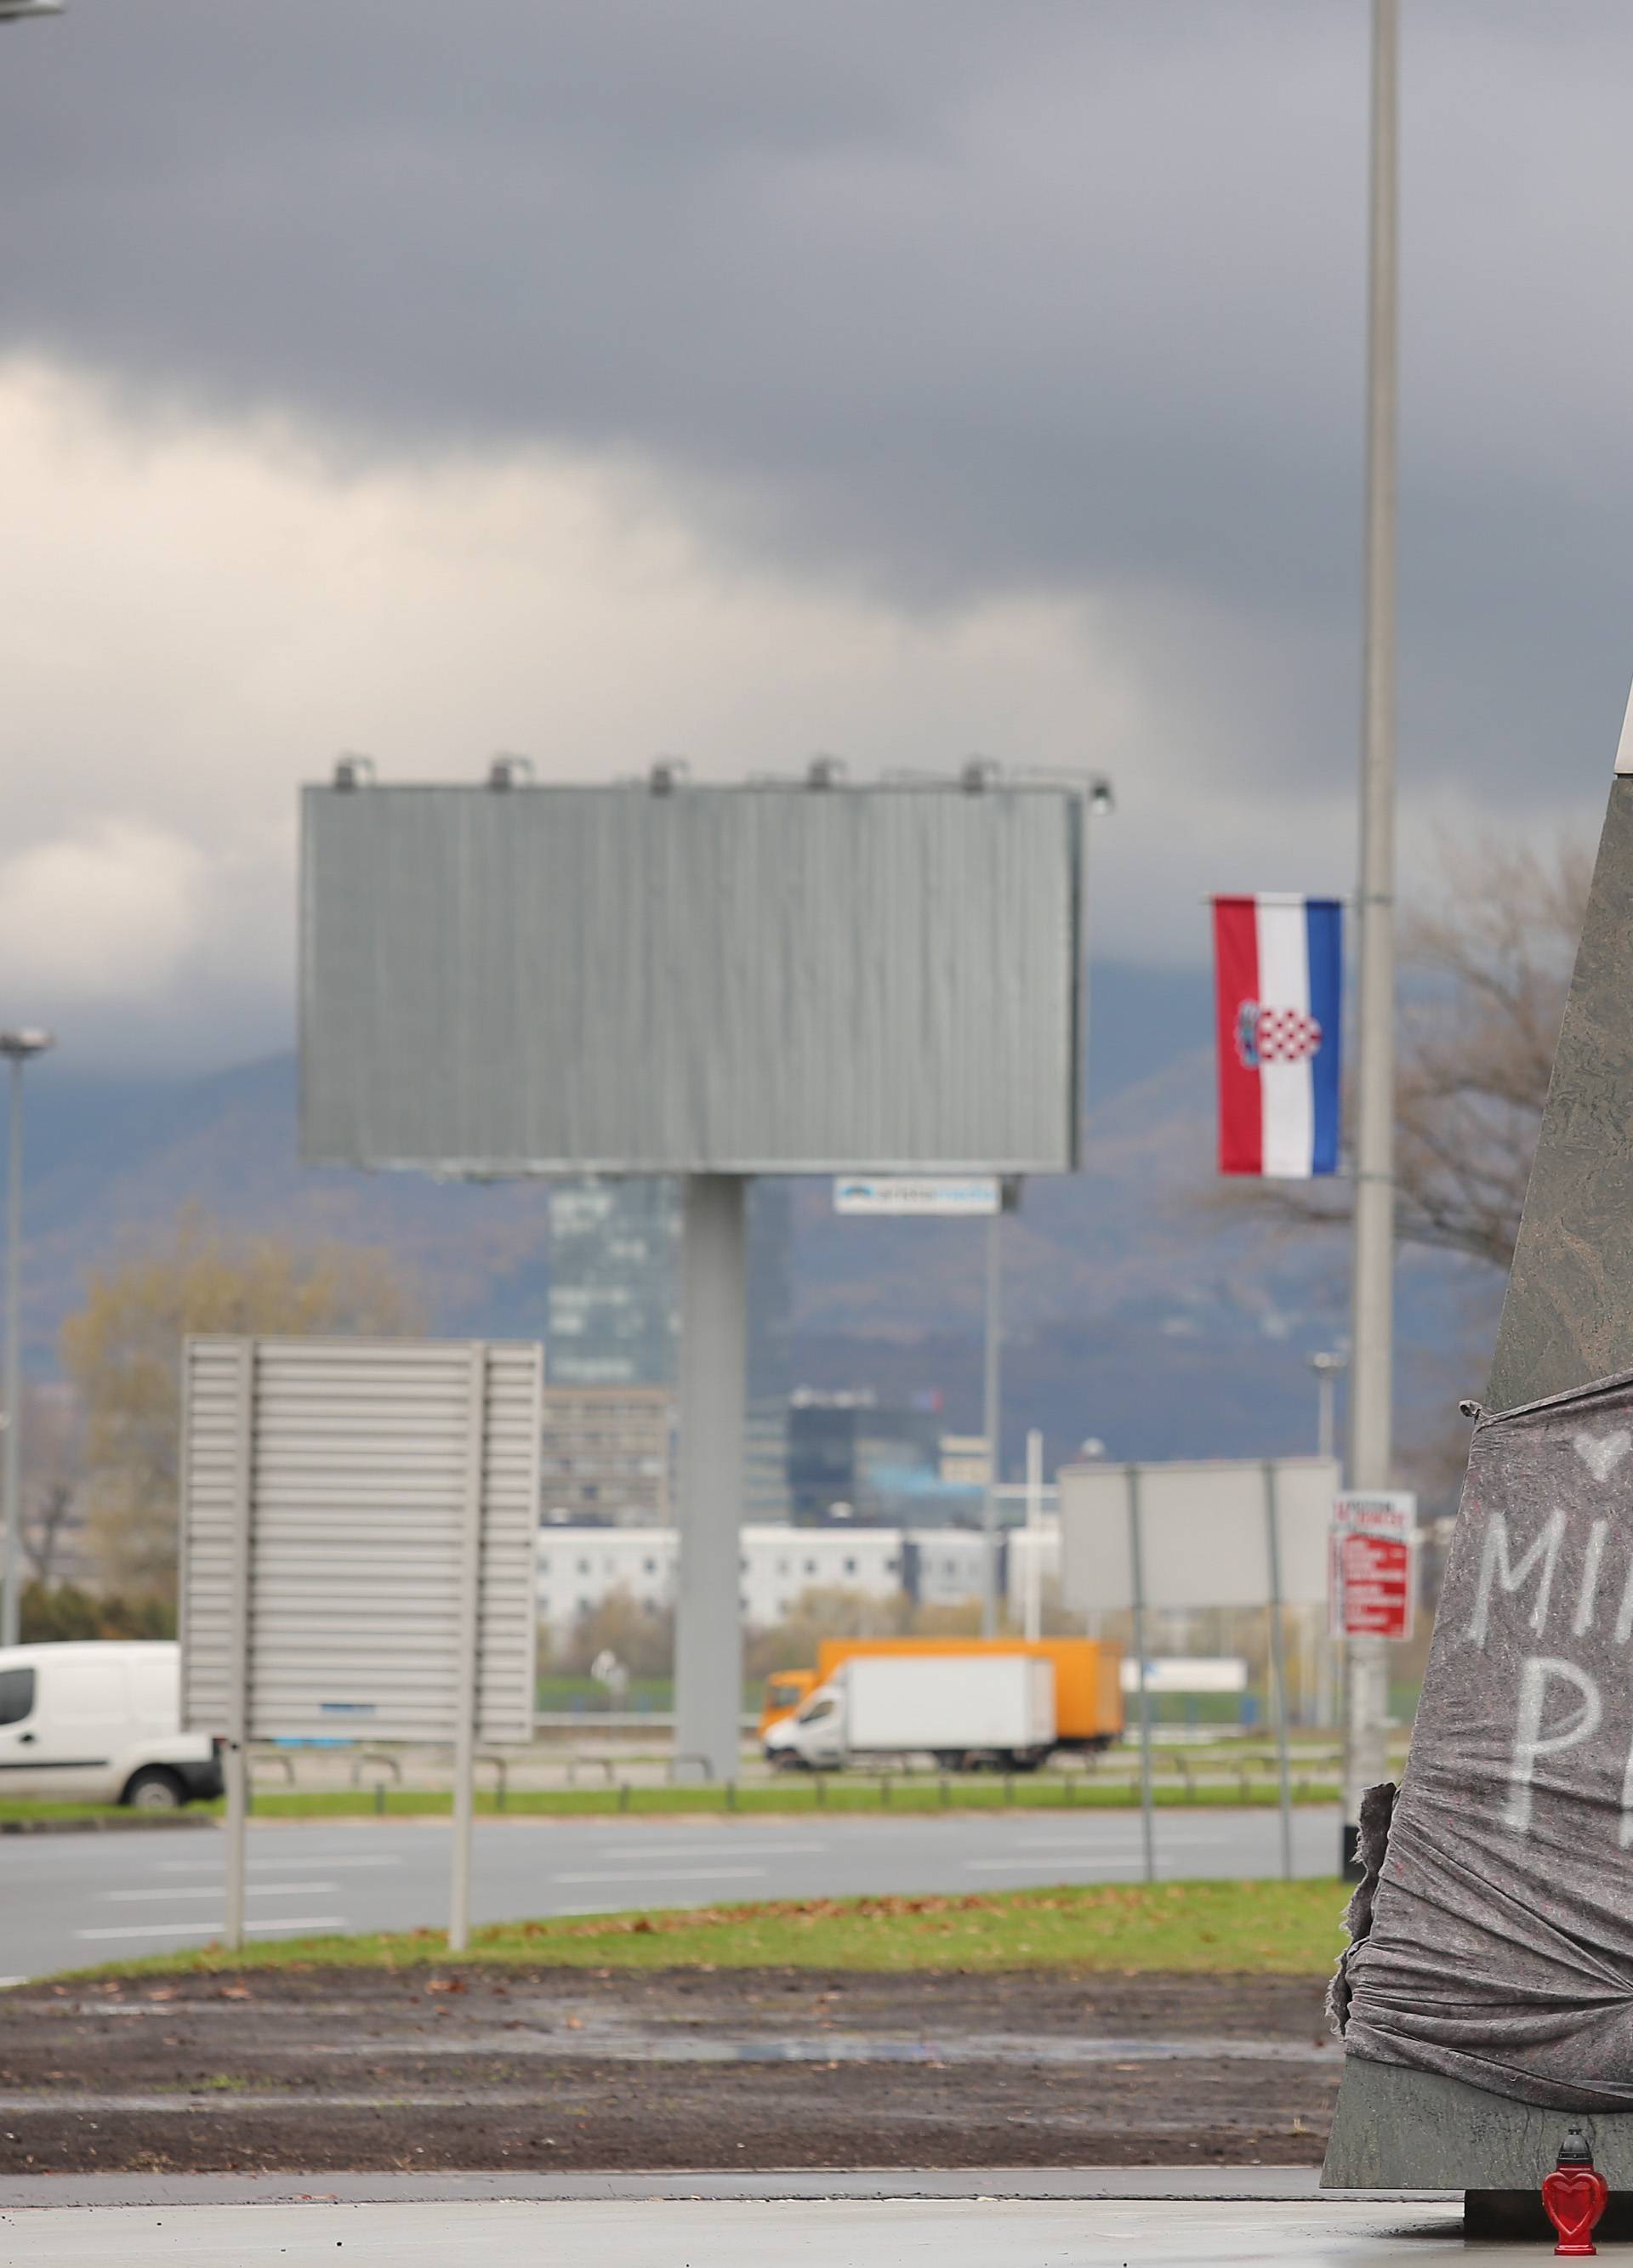 Zagreb: Na granitnoj piramidi osvanuo grafit "Mikijev piki"